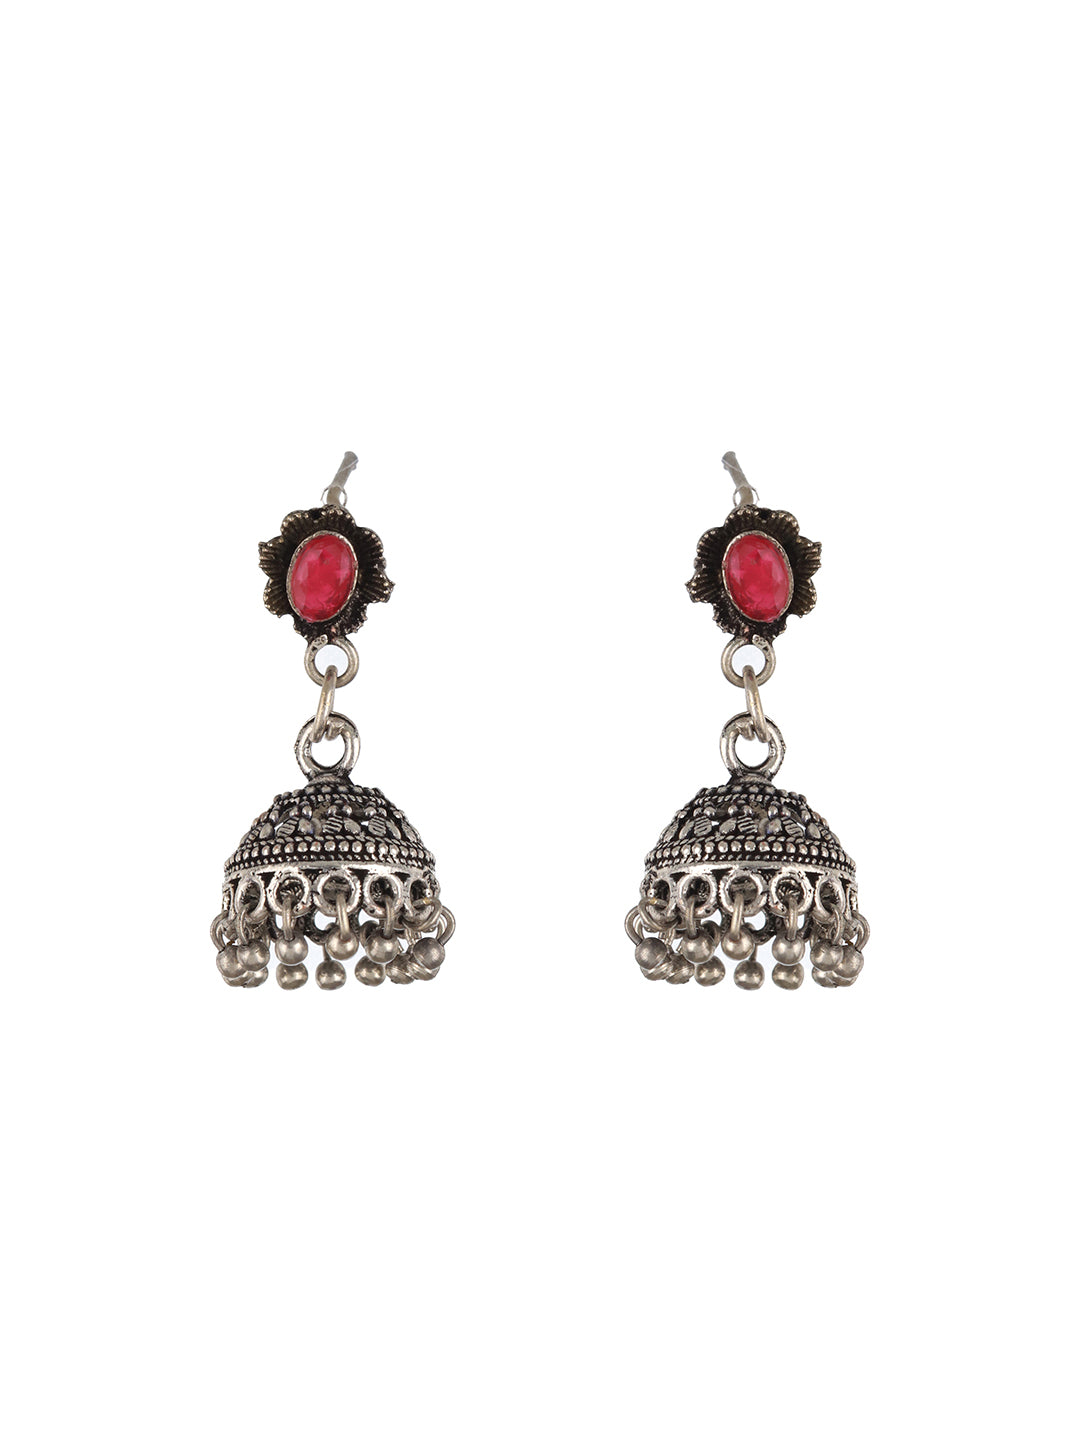 Oxidised Silver-Plated Red Stone-Studded Jewellery Set